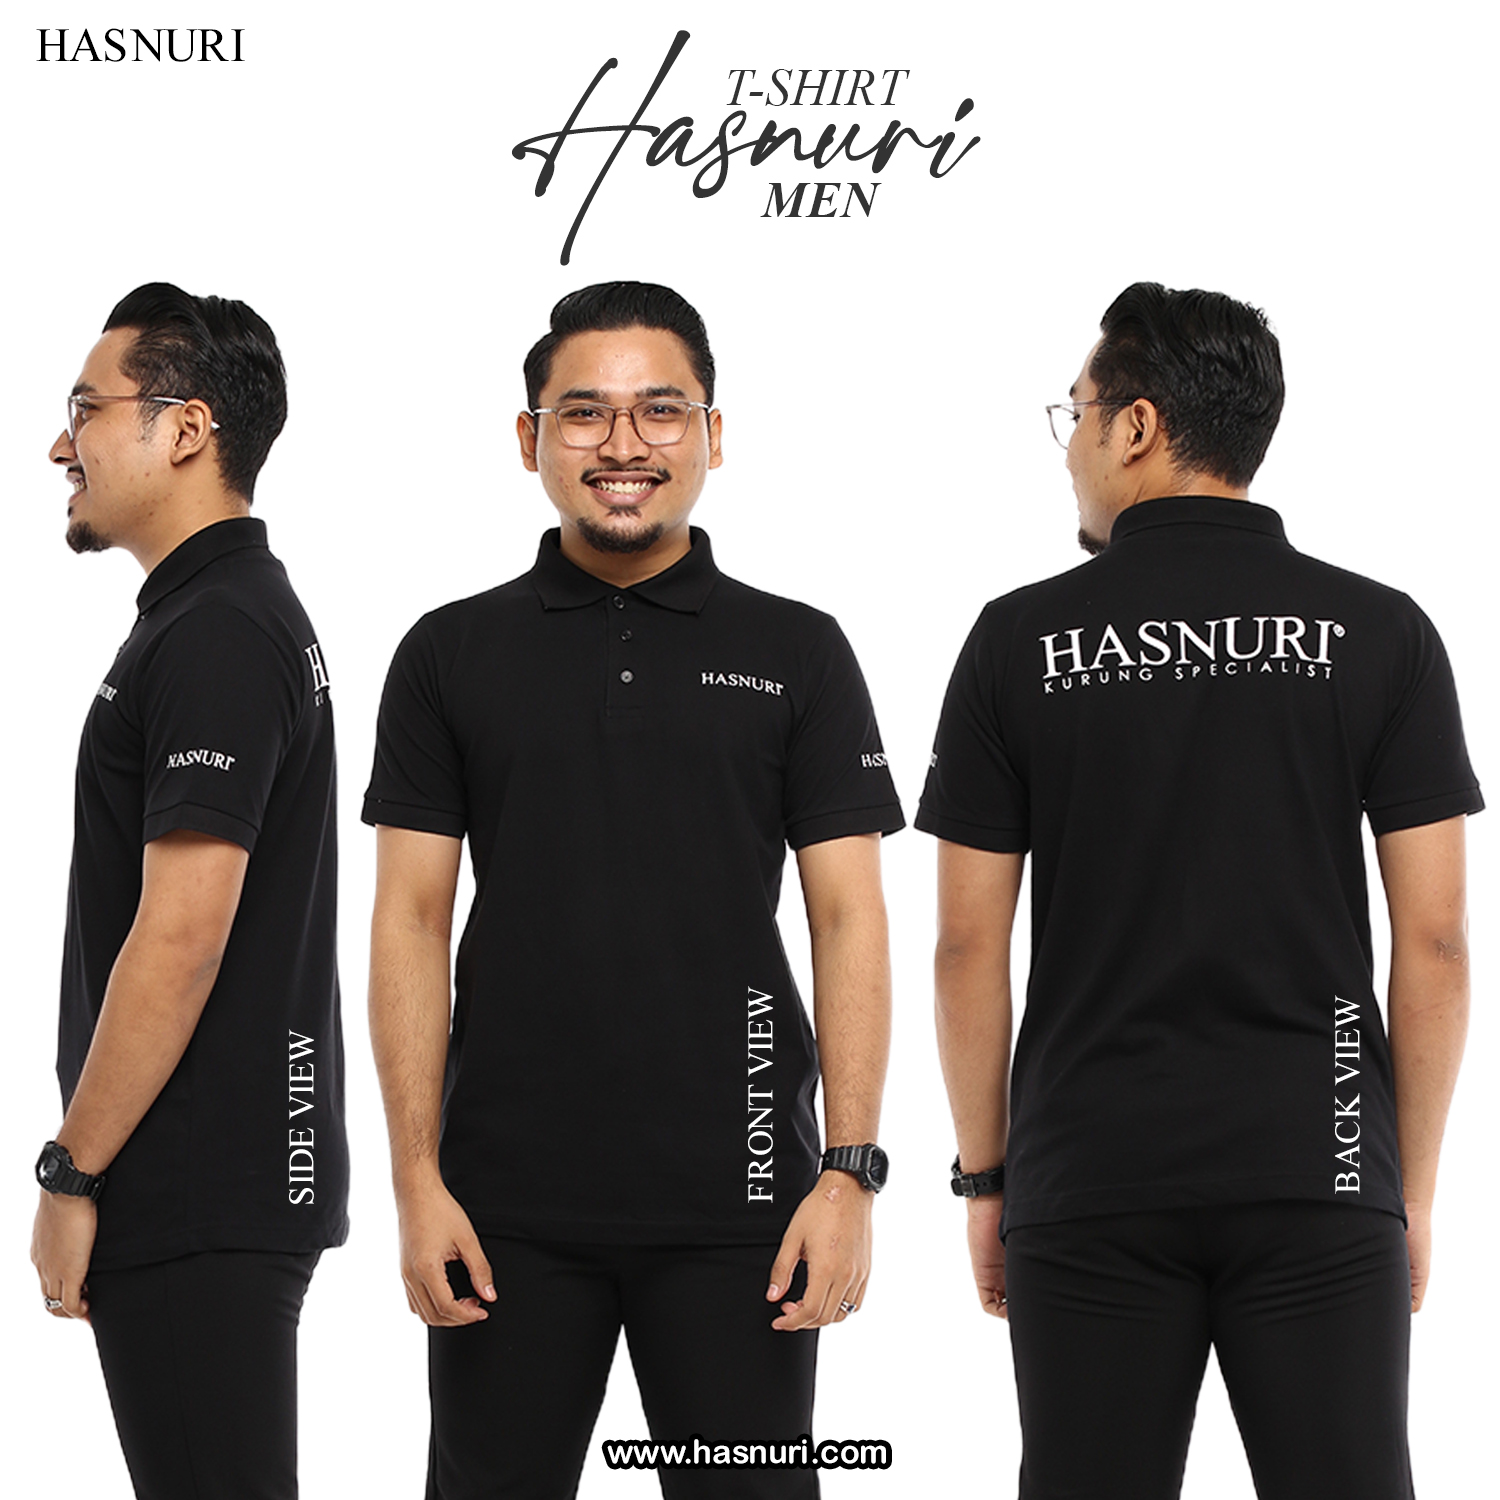 T-shirt Hasnuri Men - Black